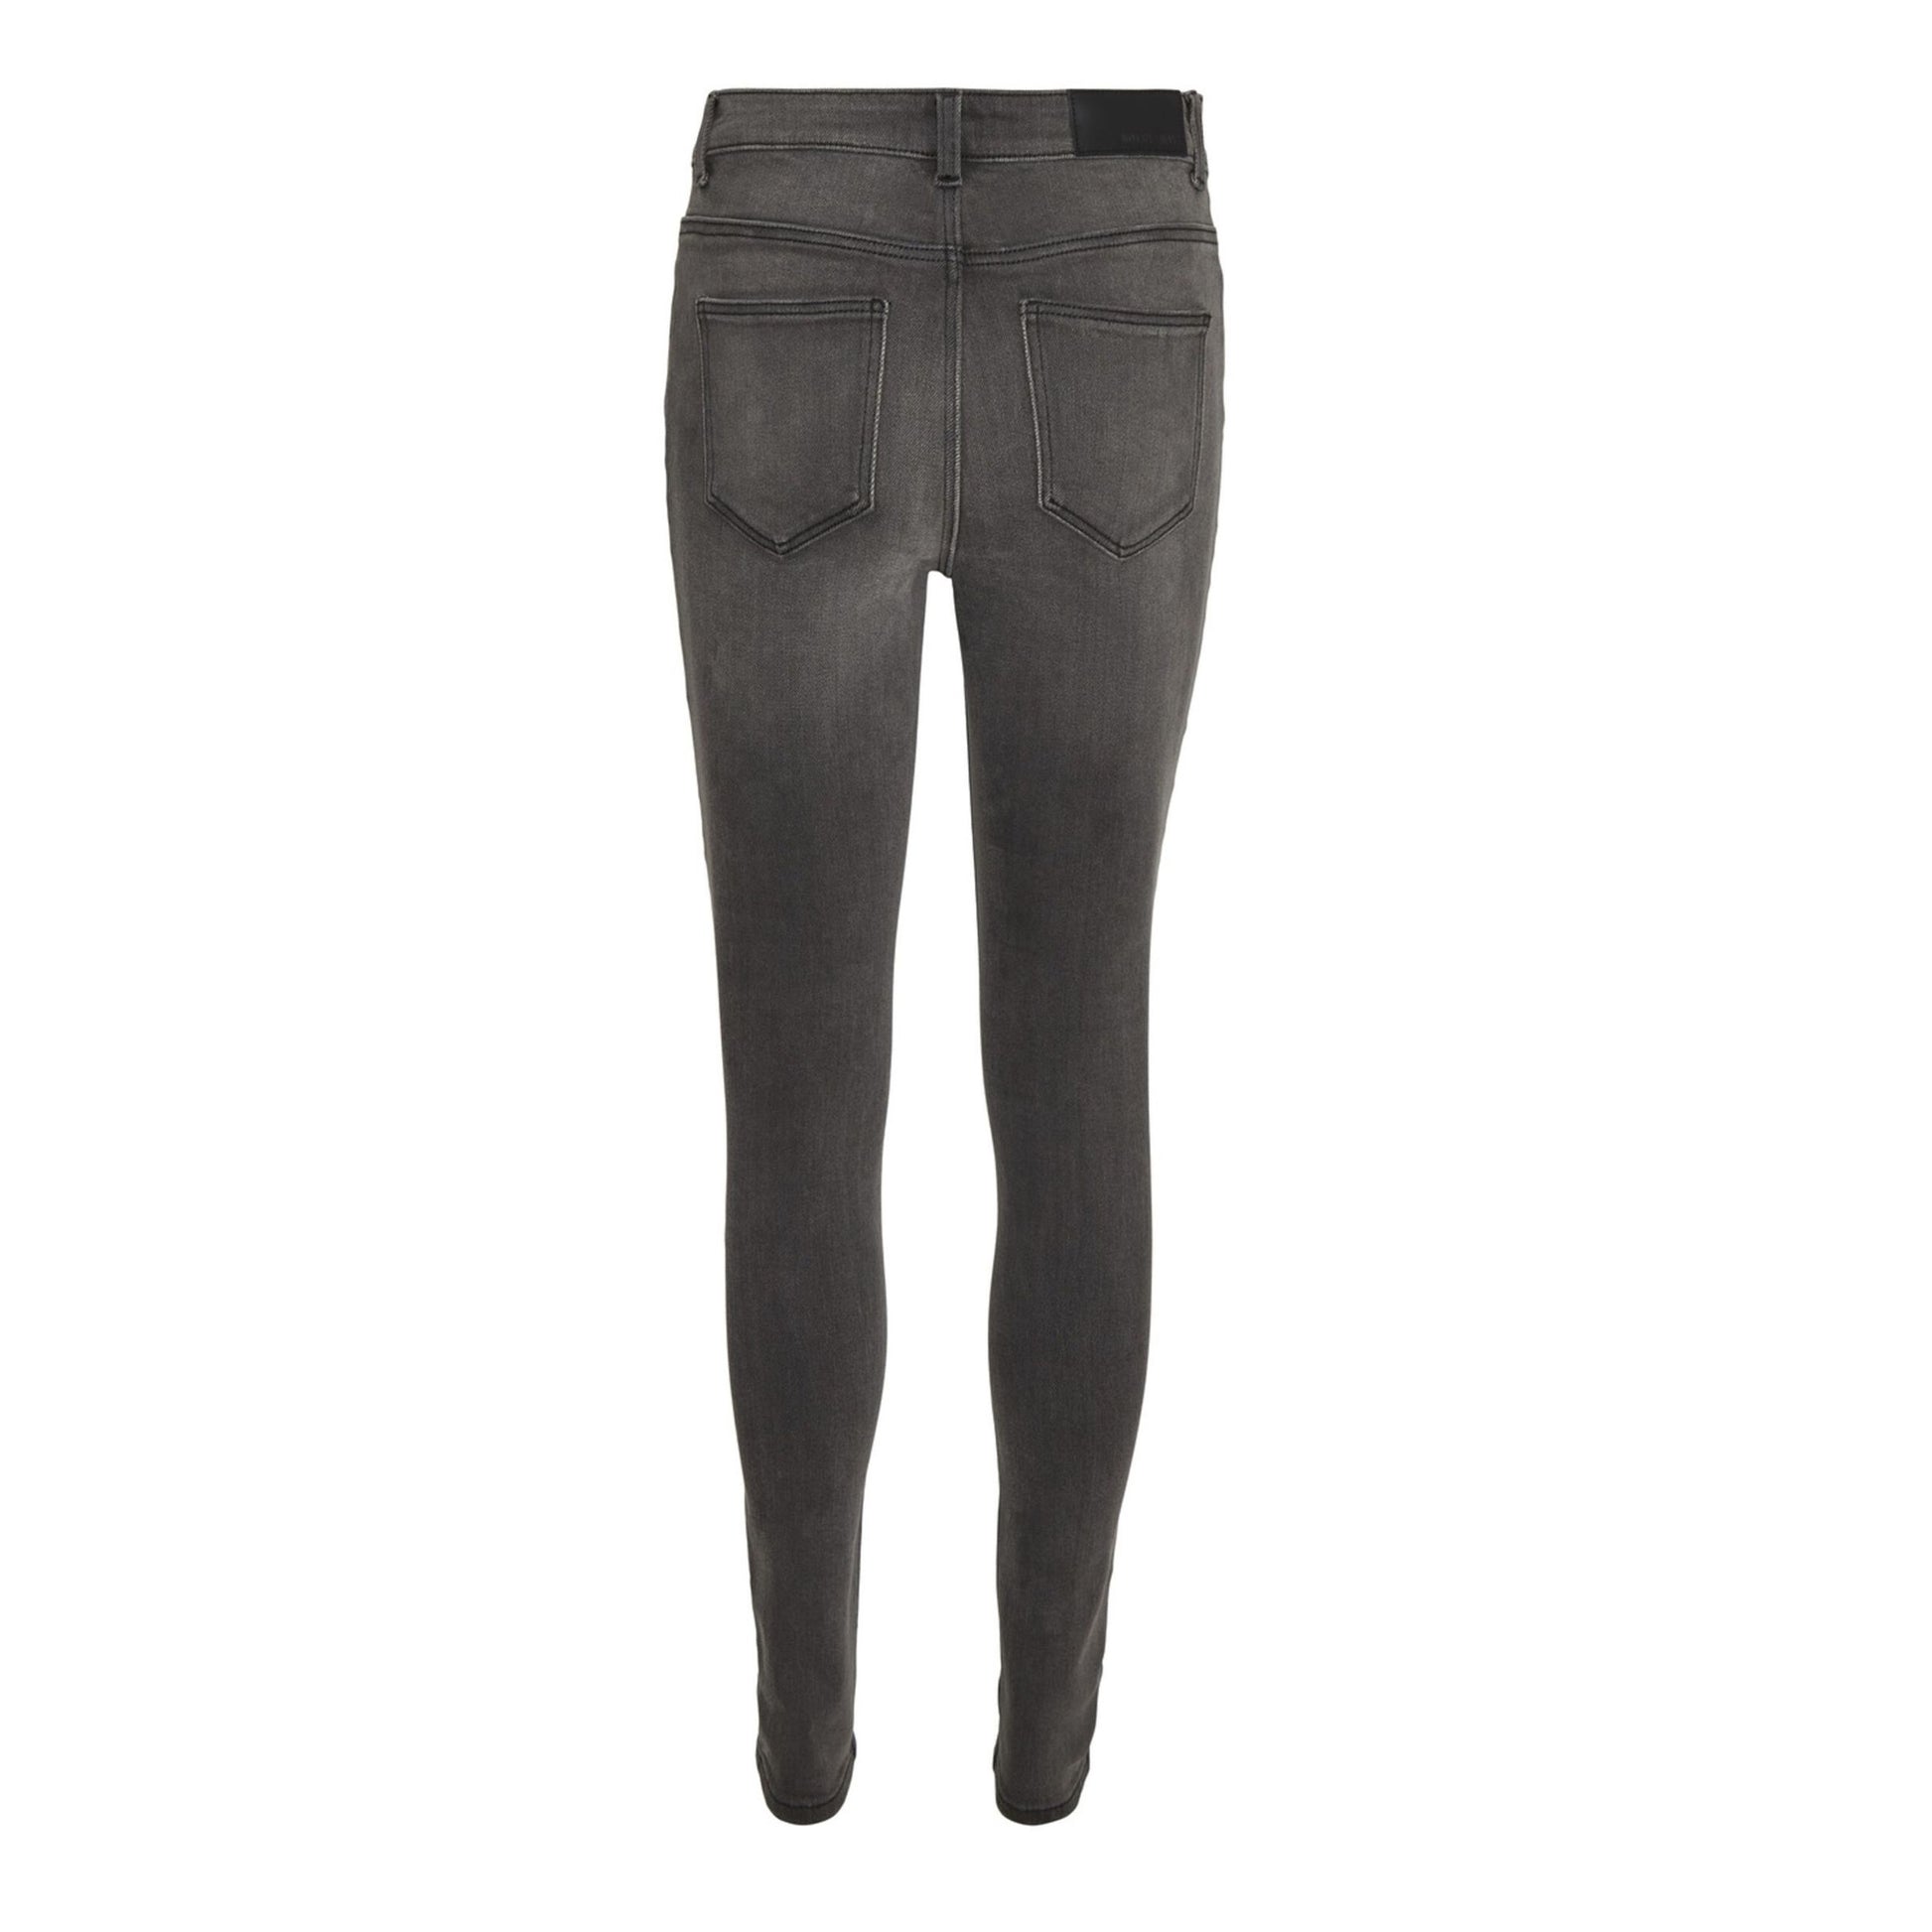 Callie Skinny Jeans - Dark Grey - for kvinde - NOISY MAY - Jeans